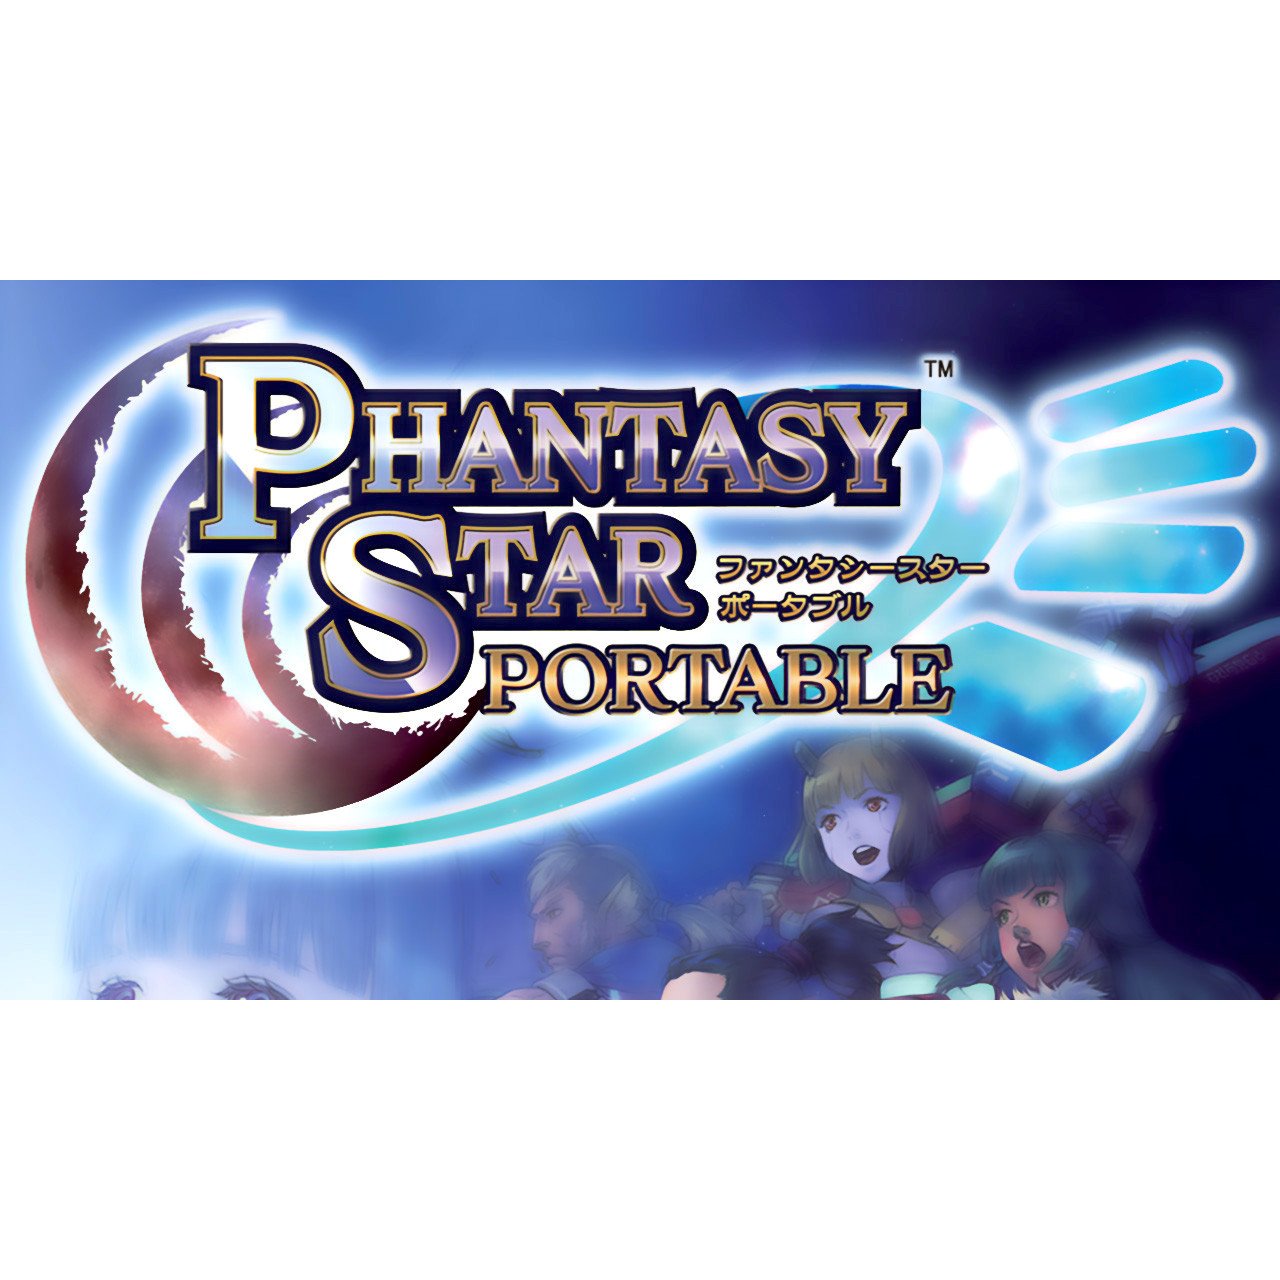 Phantasy Star Portable Import PlayStation Portable PSP Game